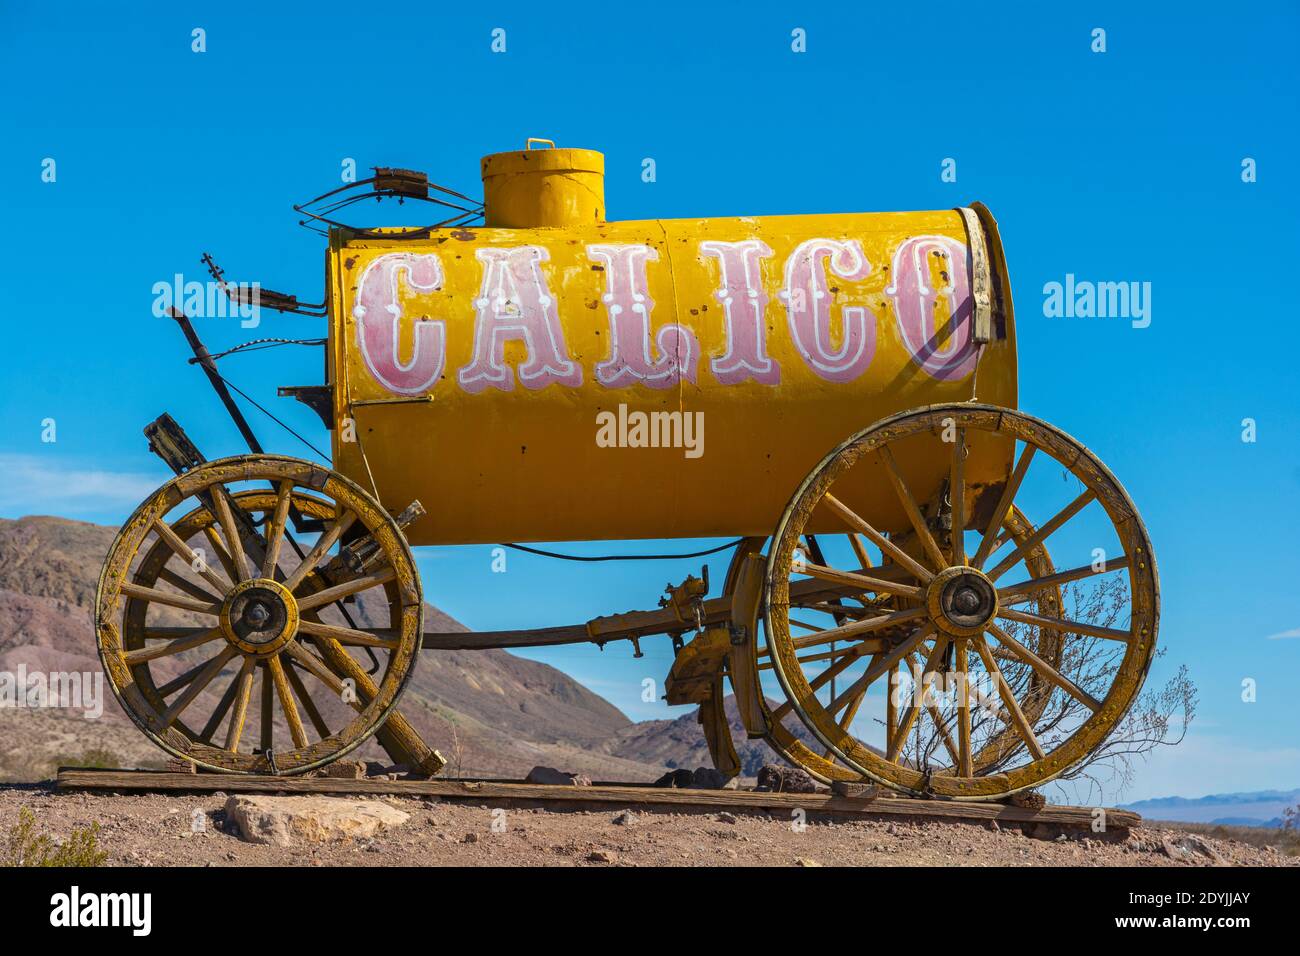 California, San Bernardino County, Calico Ghost Town, gegründet 1881 als Silberbergbaustadt, Wasserwagen am Eingang zu sehen Stockfoto